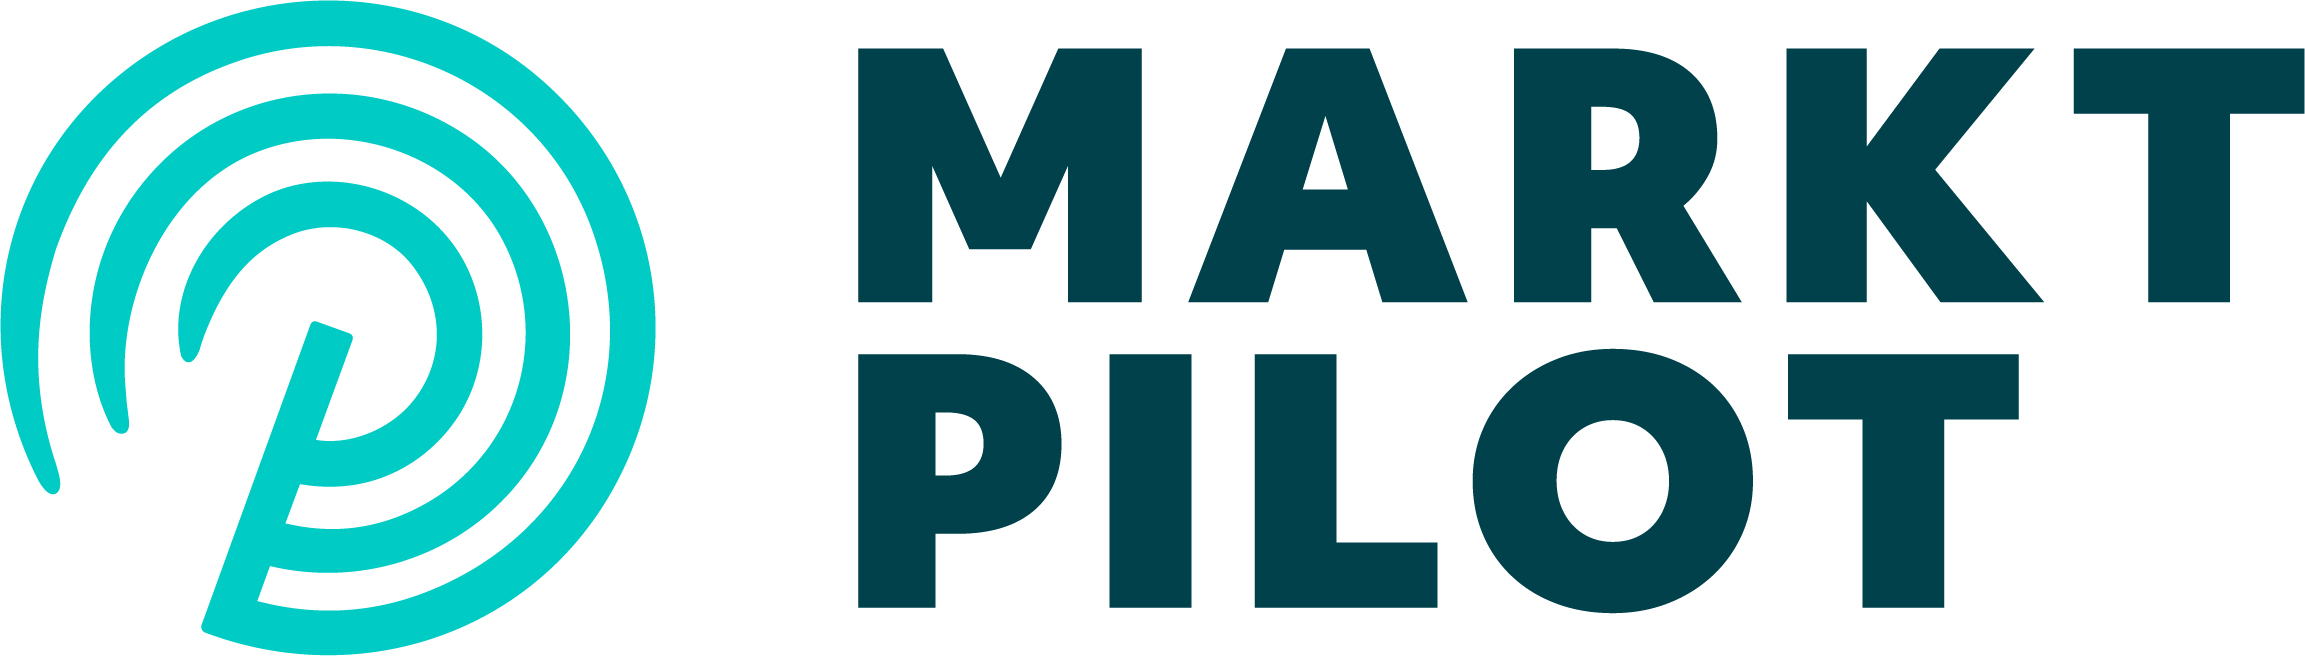 MARKT-PILOT_Logo_positiv_RGB-2